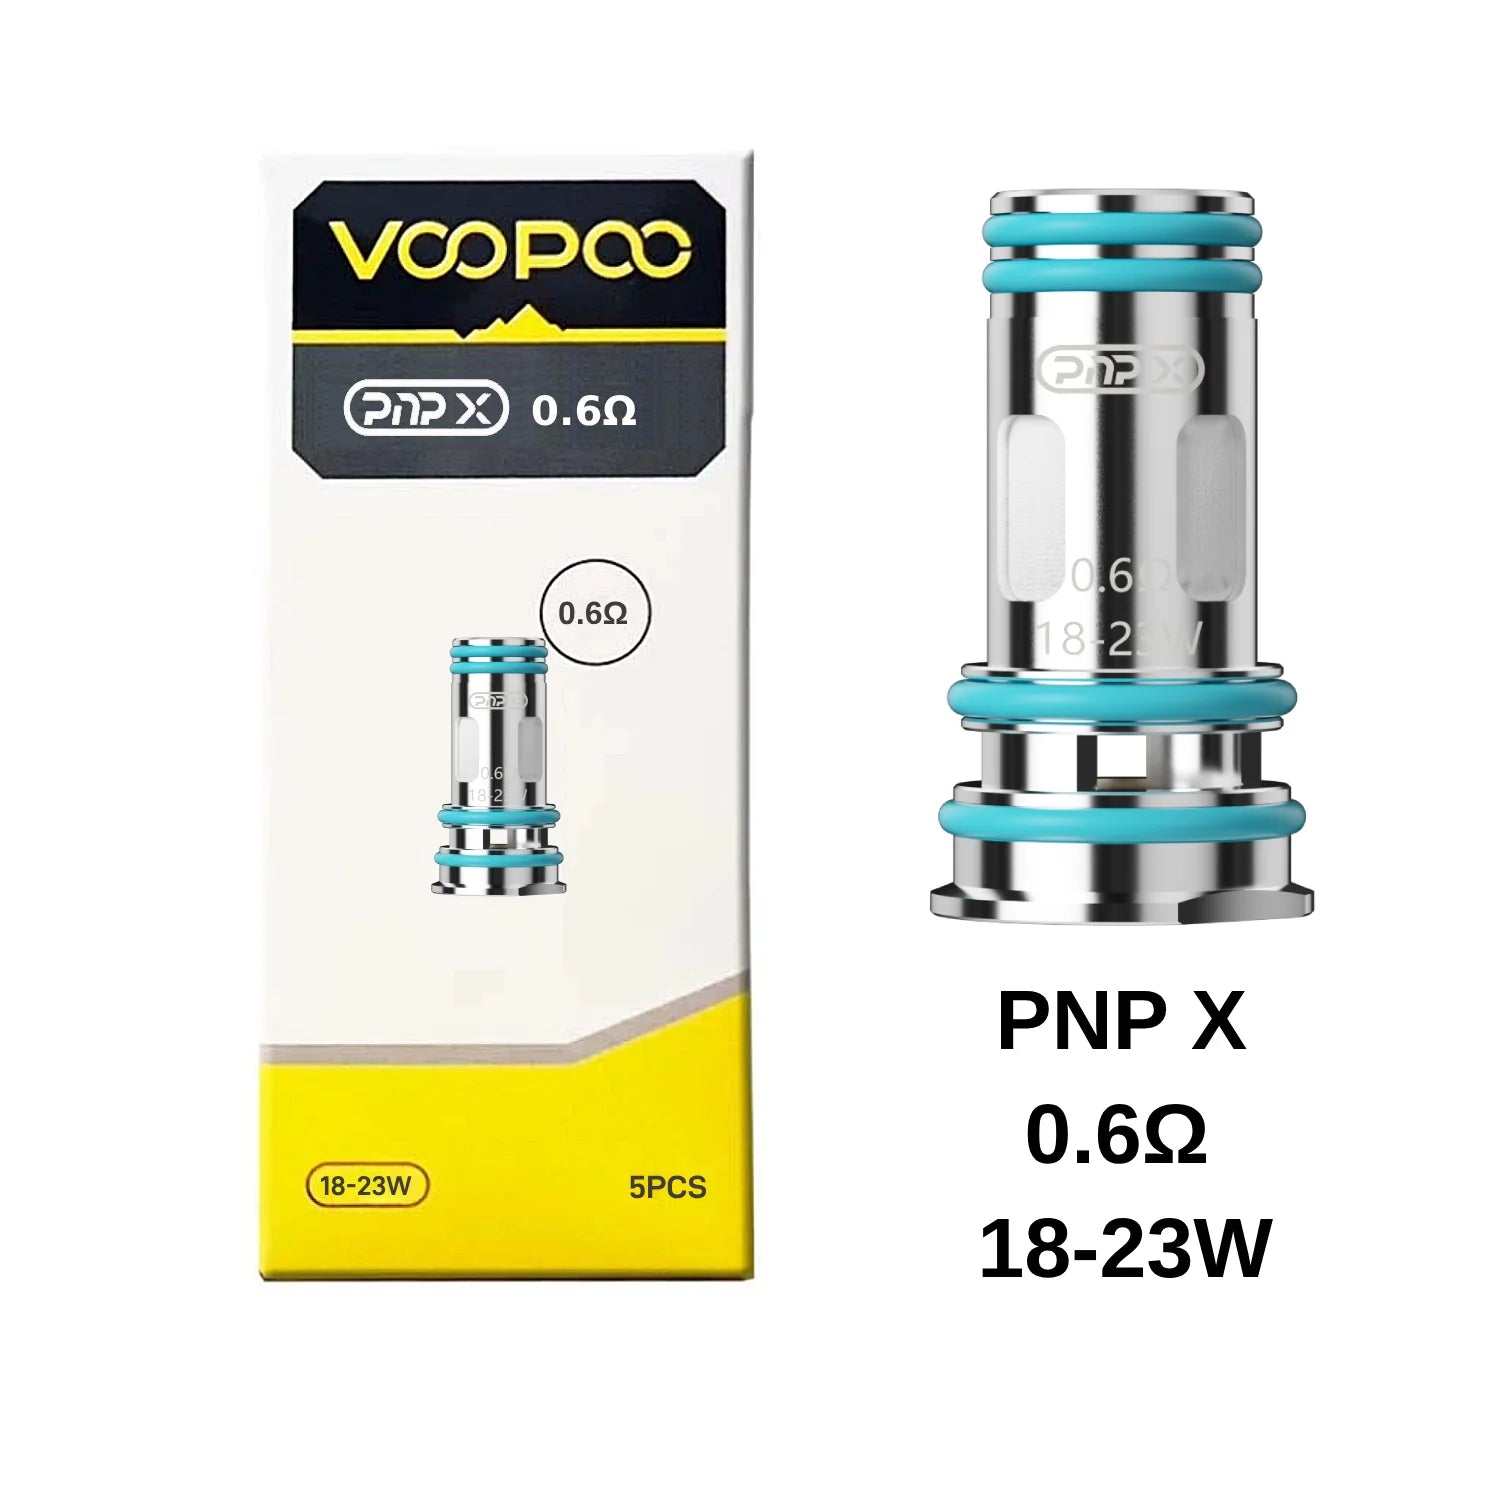 VOOPOO PNP X 0.6 COILS (5PCS)